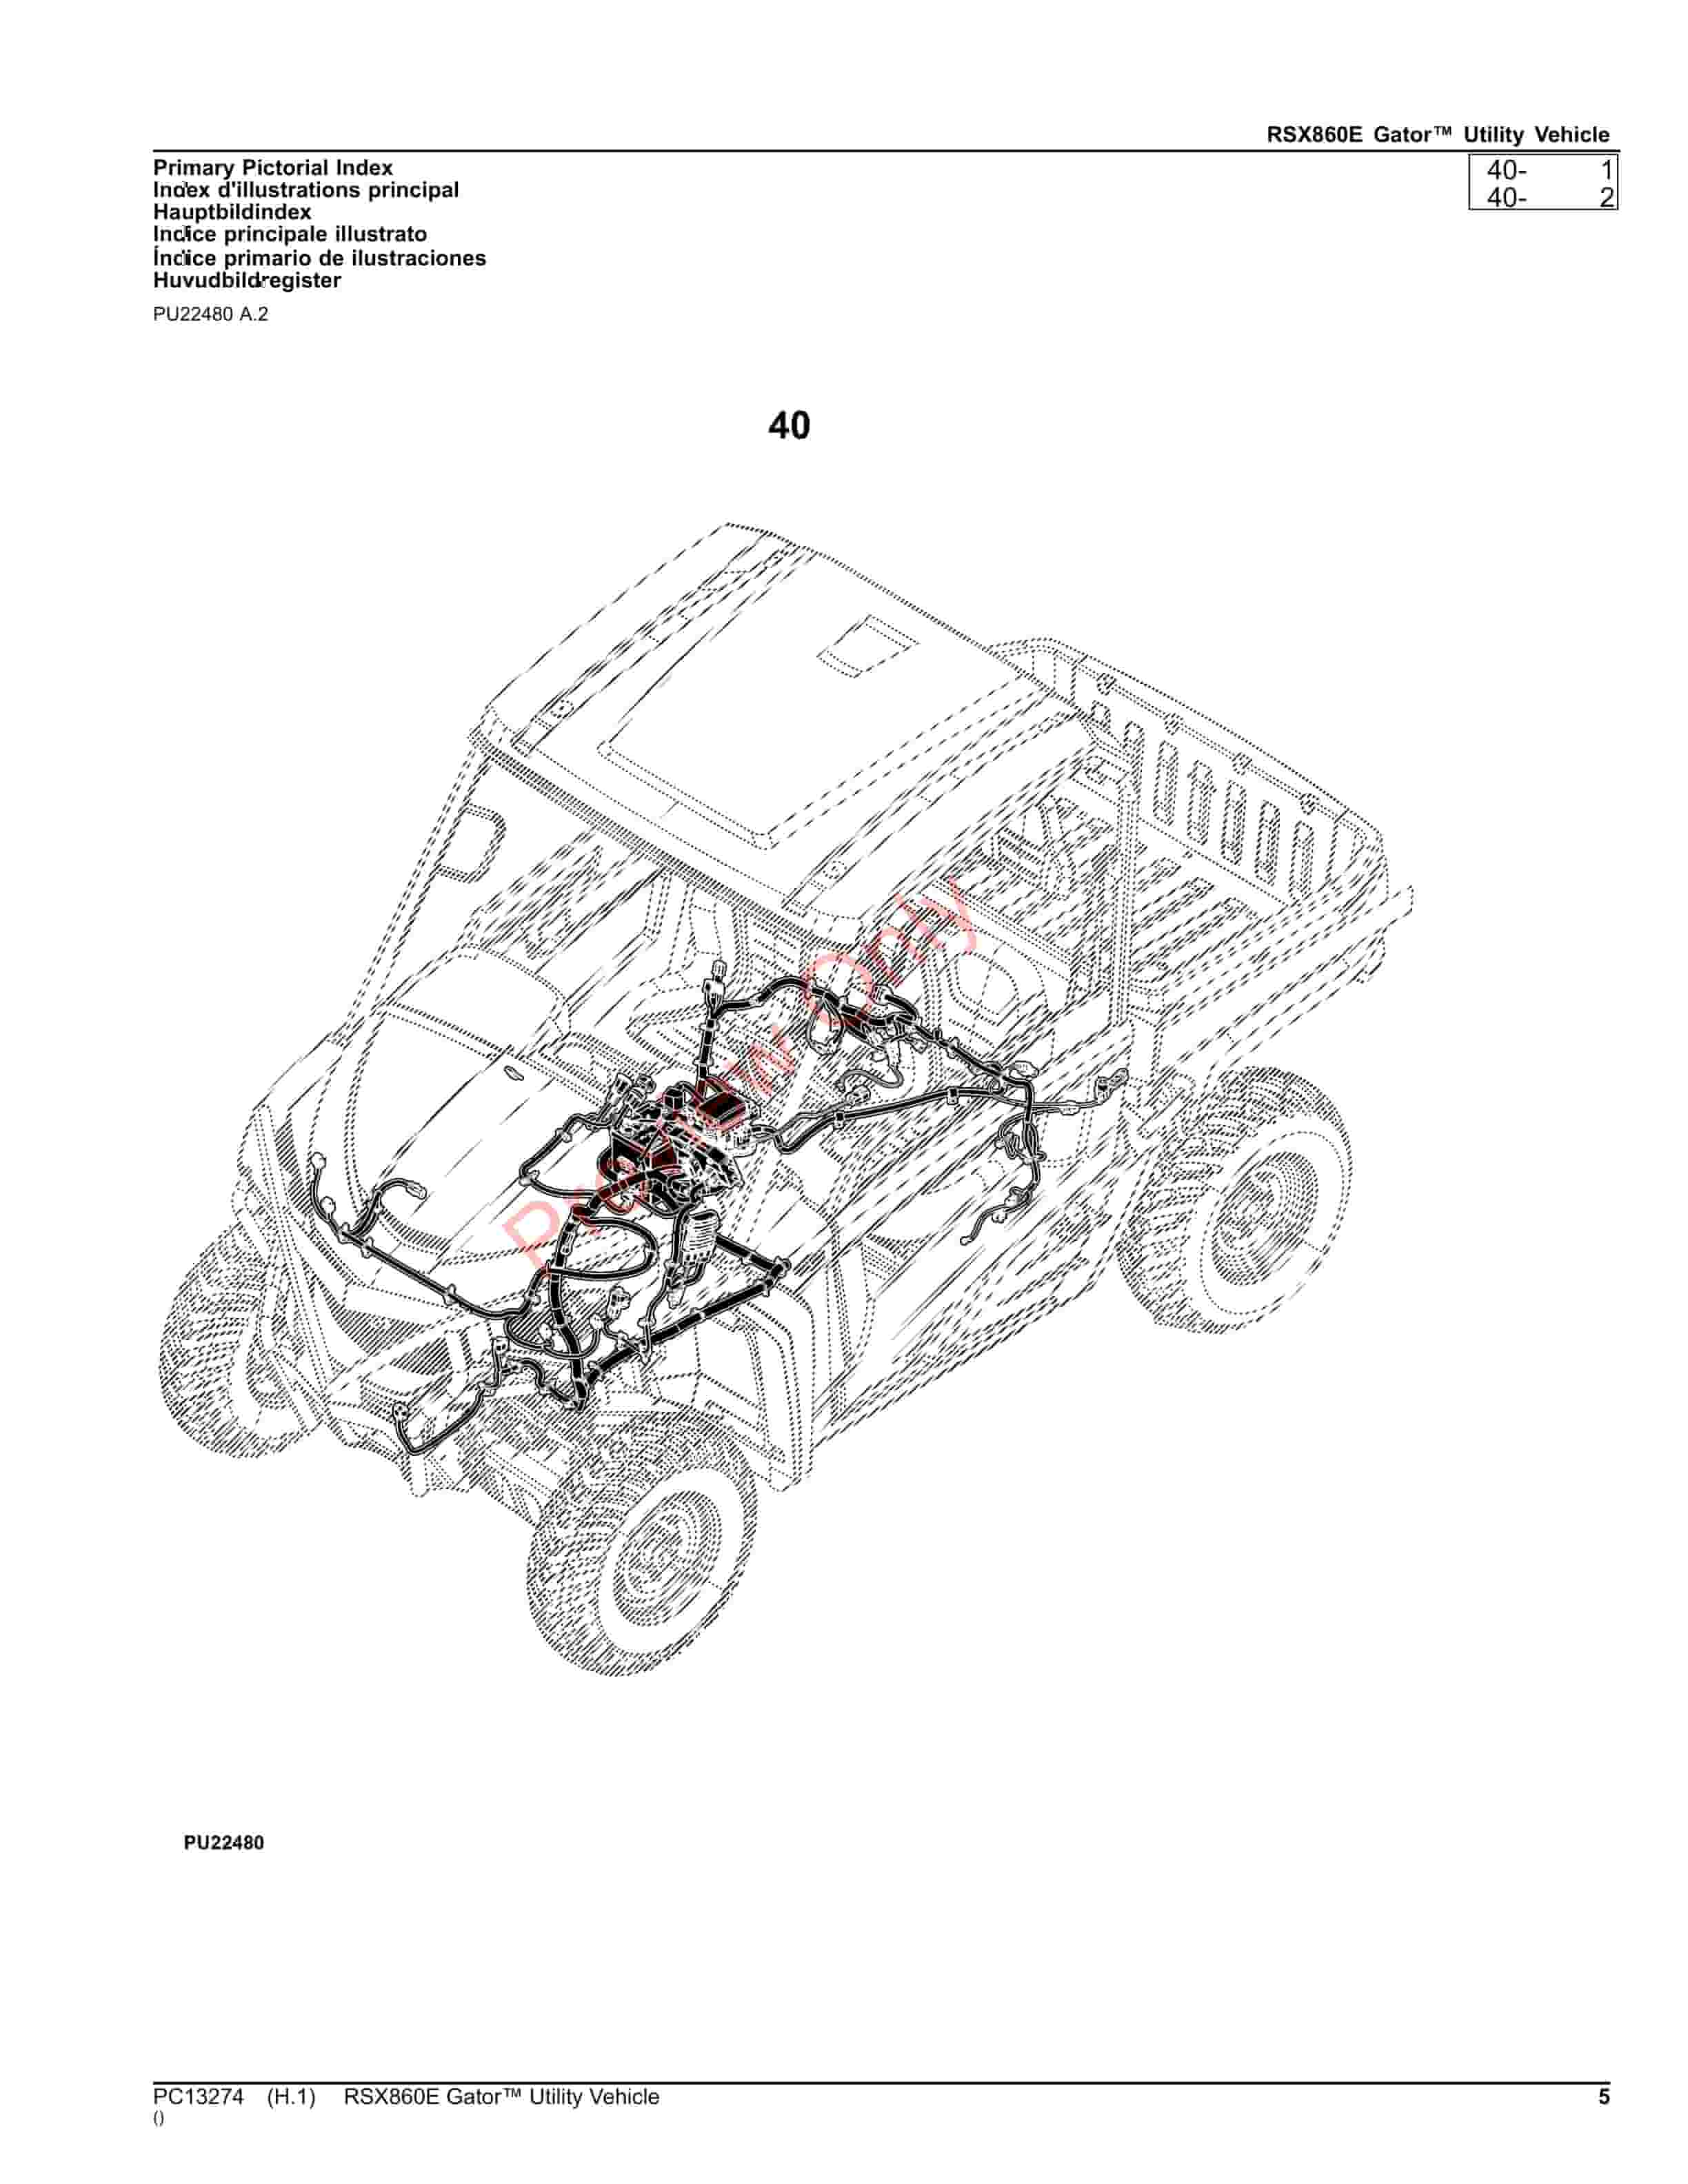 John Deere RSX860E Gator Utility Vehicle Parts Catalog PC13274 14SEP23-5